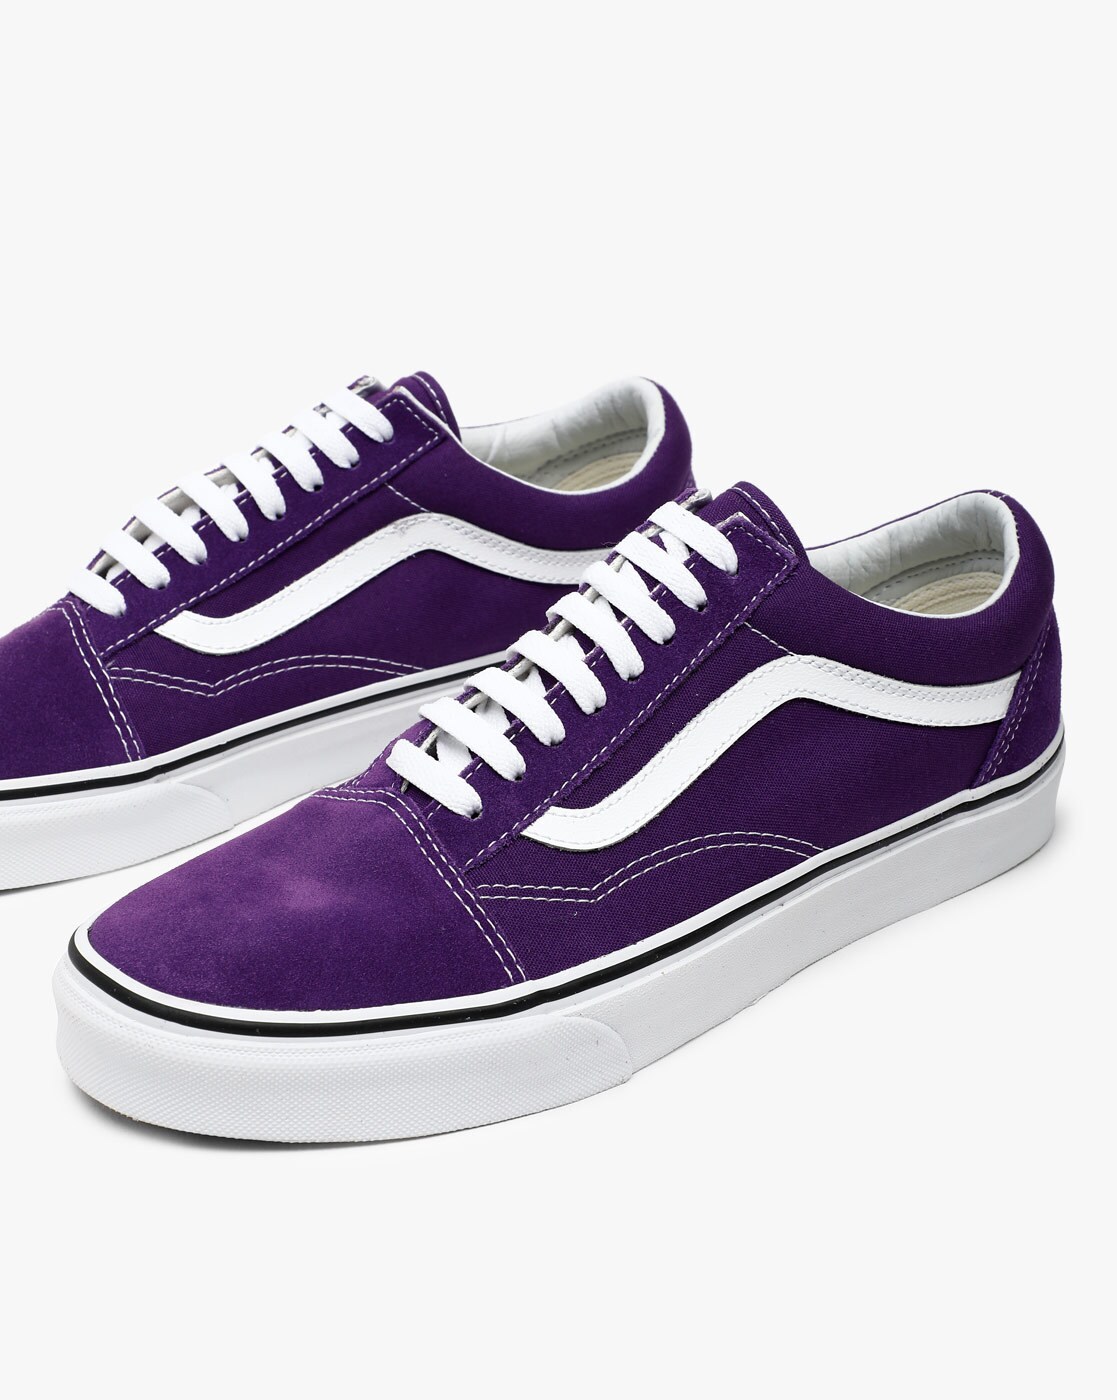 purple and white vans